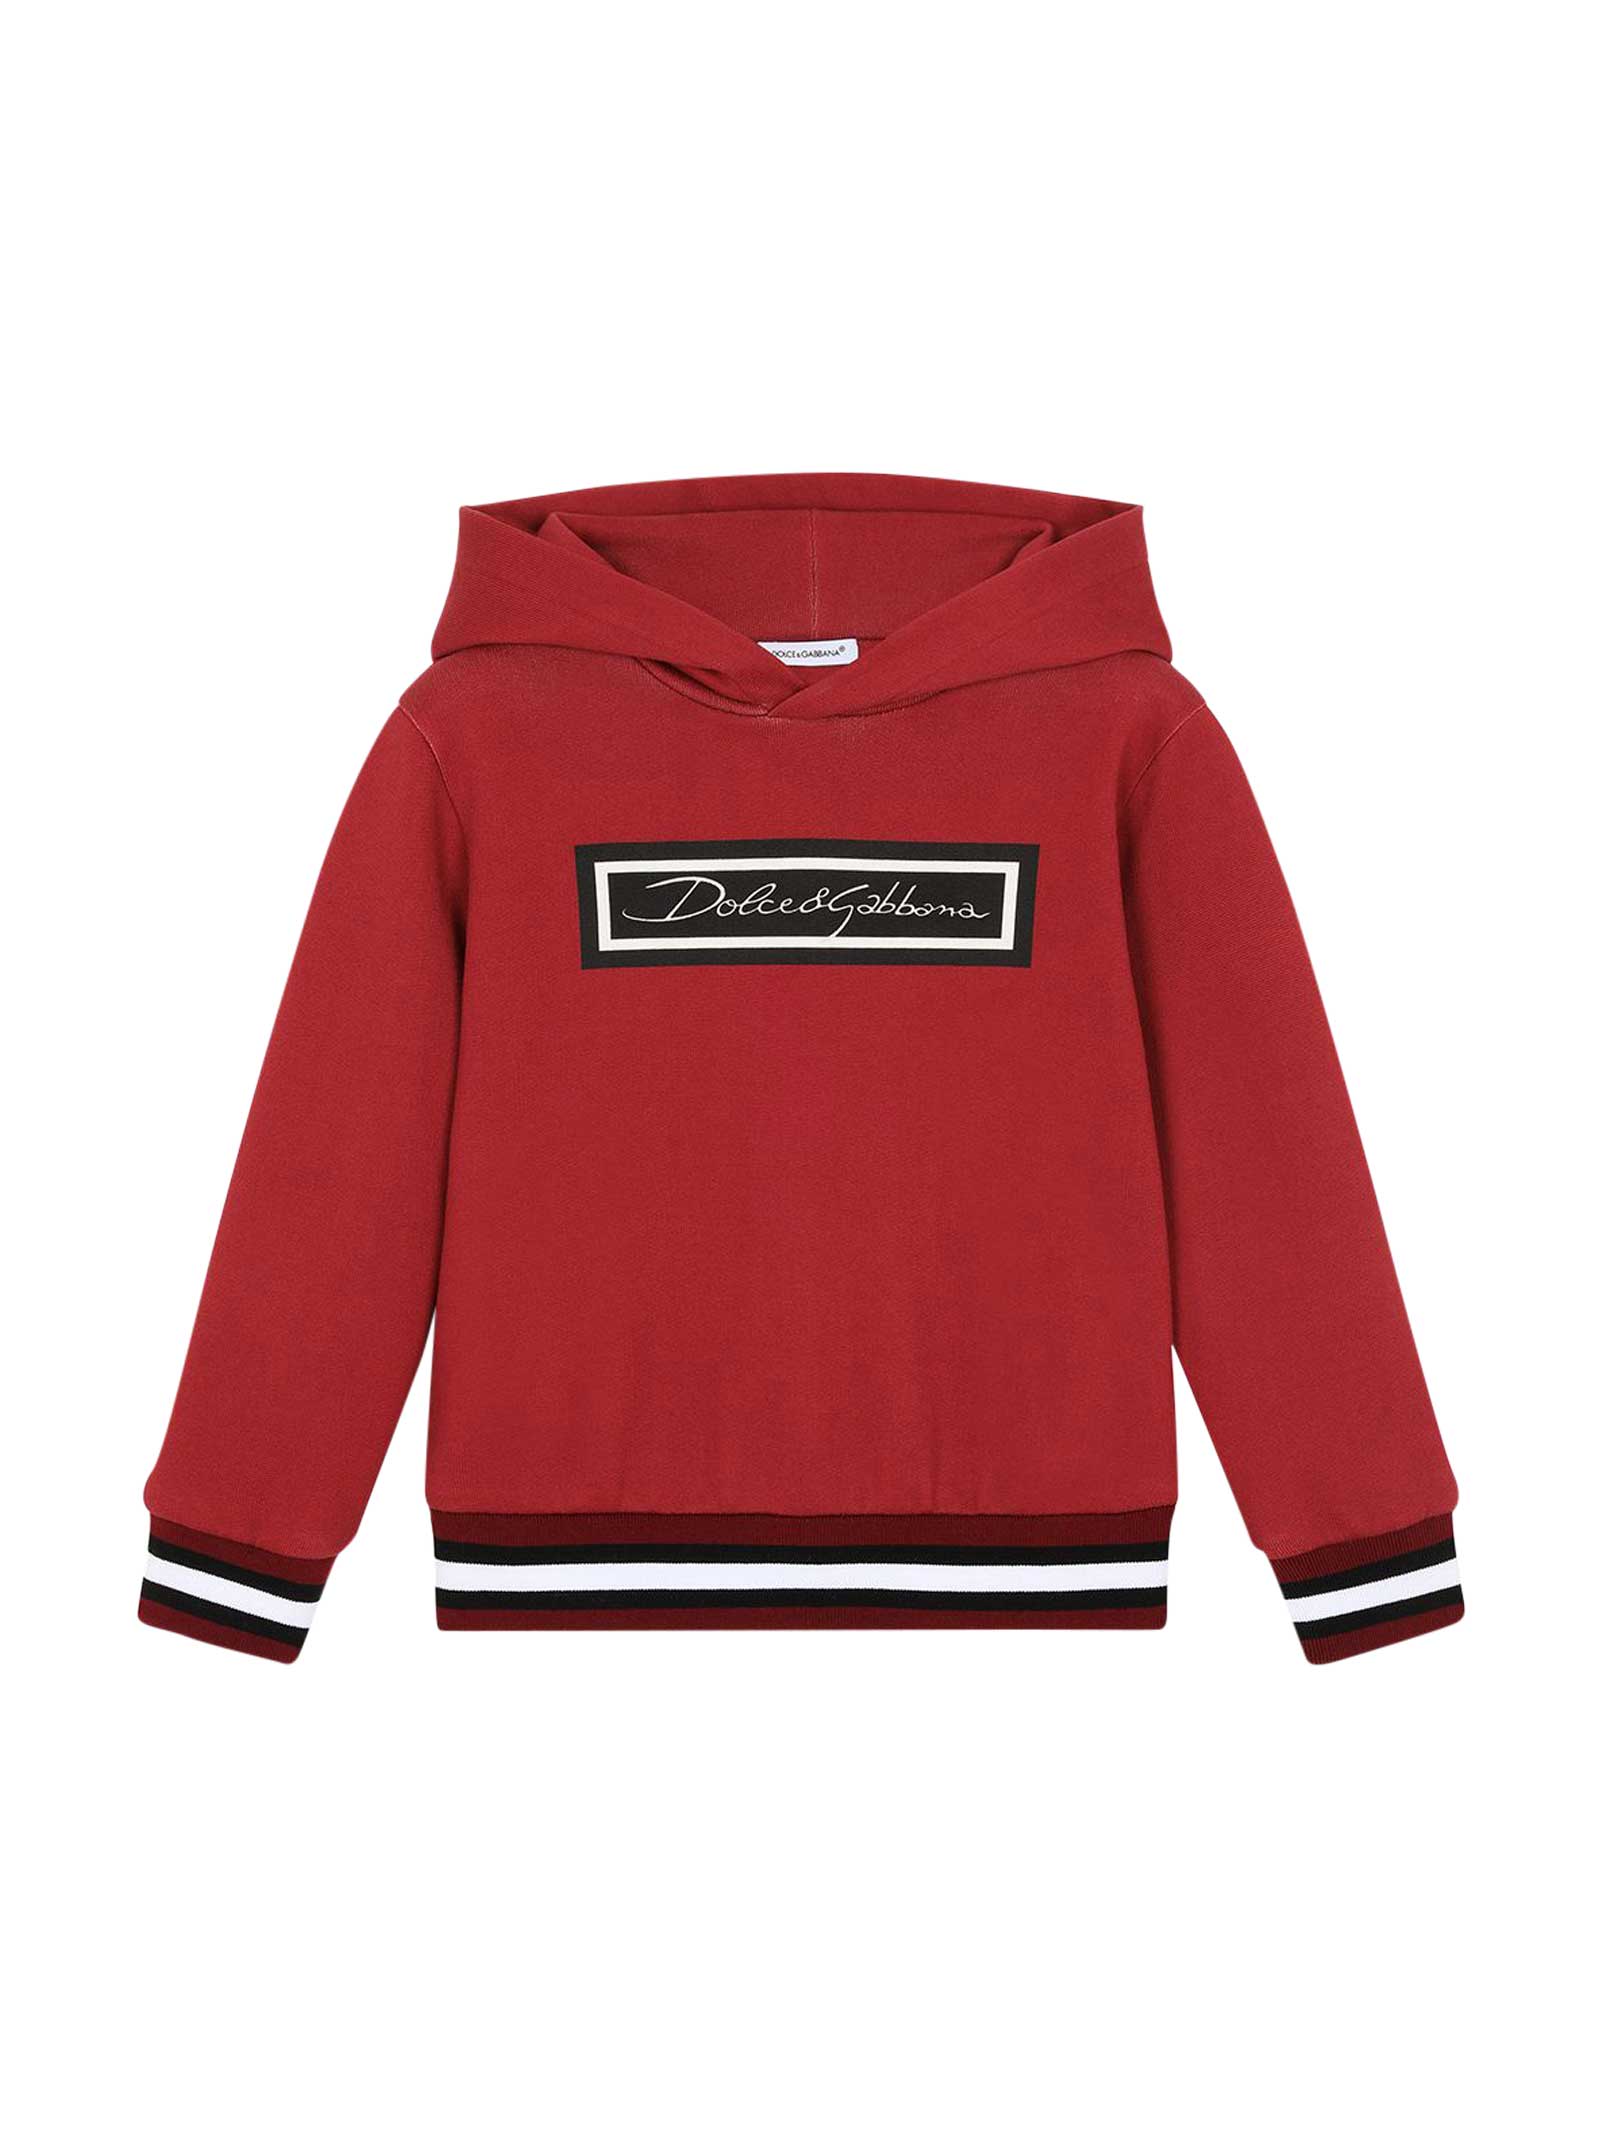 Dolce & Gabbana Red Sweatshirt